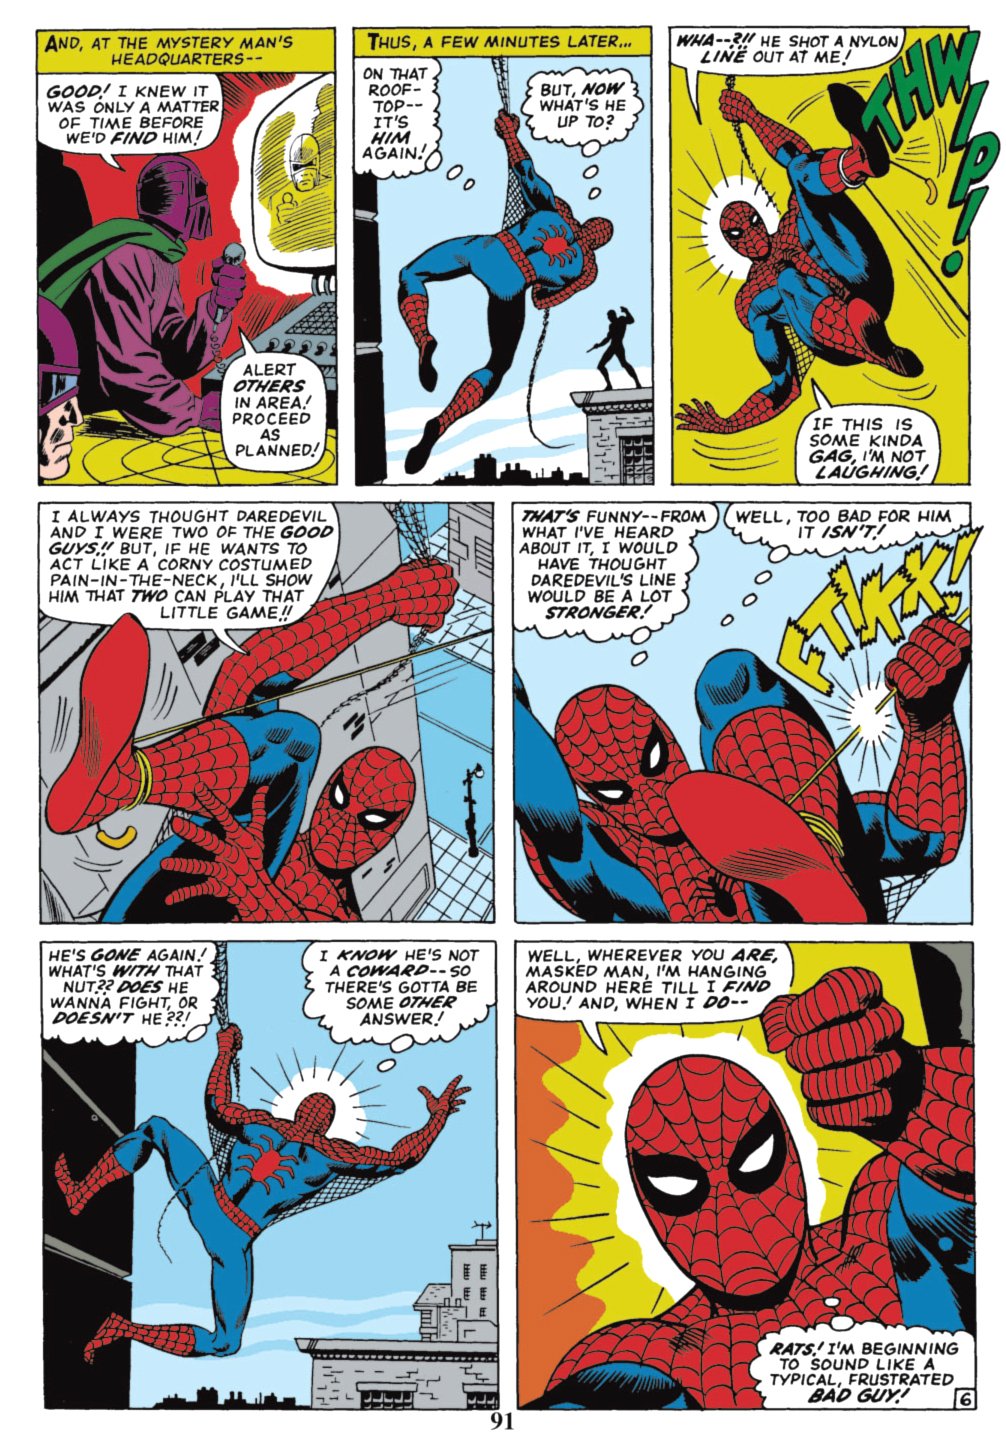 Daredevil #16 p 6 (HISTORIC FIRST TIME ROMITA DRAWS SPIDER-MAN!) Large ...